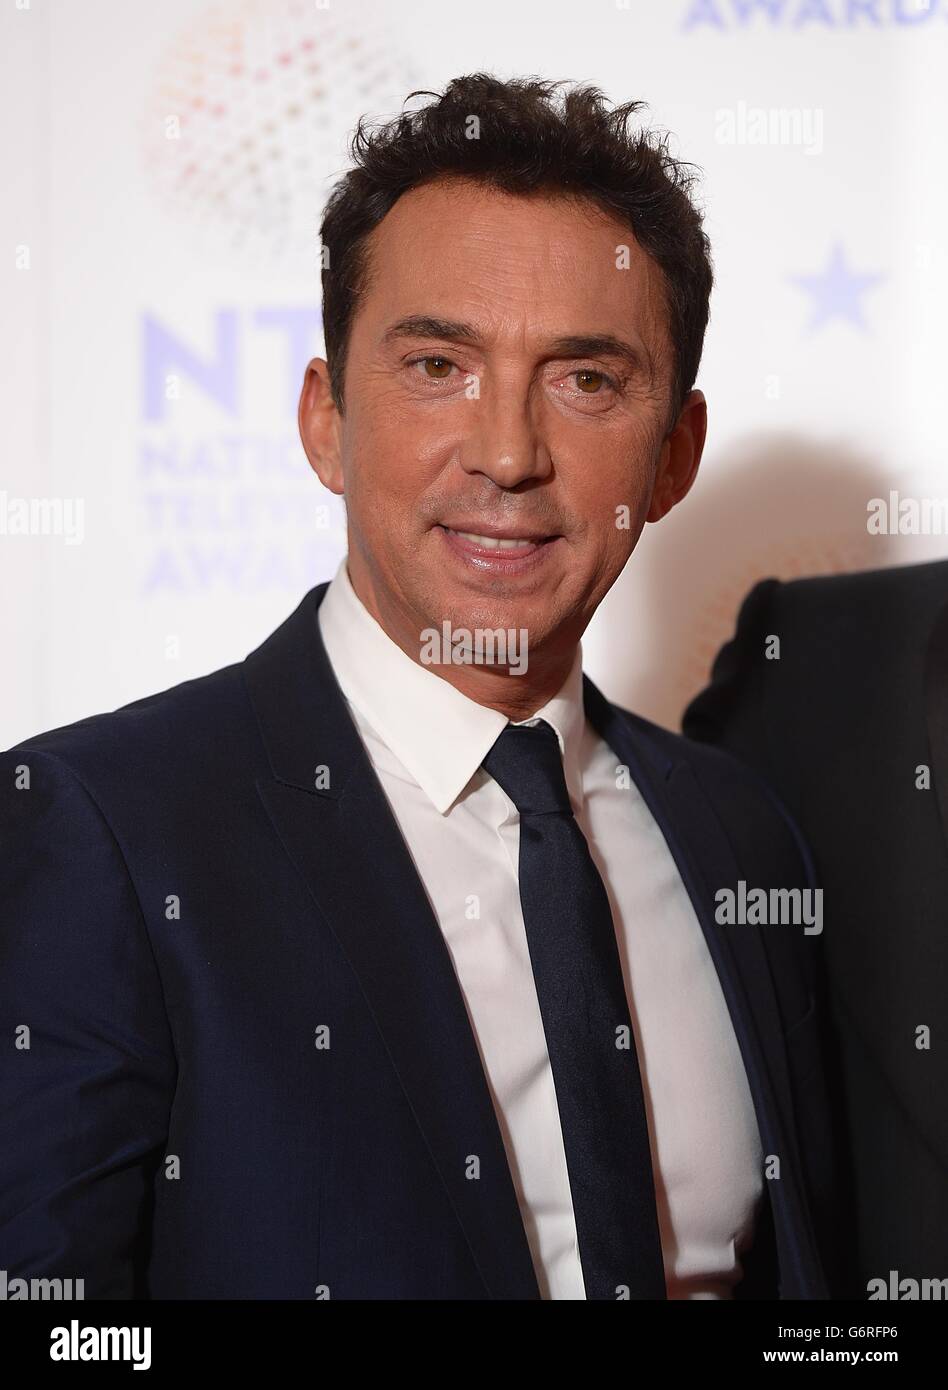 National Television Awards 2014 - Press Room - London. Bruno Tonioli in the Press Room at the 2014 National Television Awards at the O2 Arena, London. Stock Photo